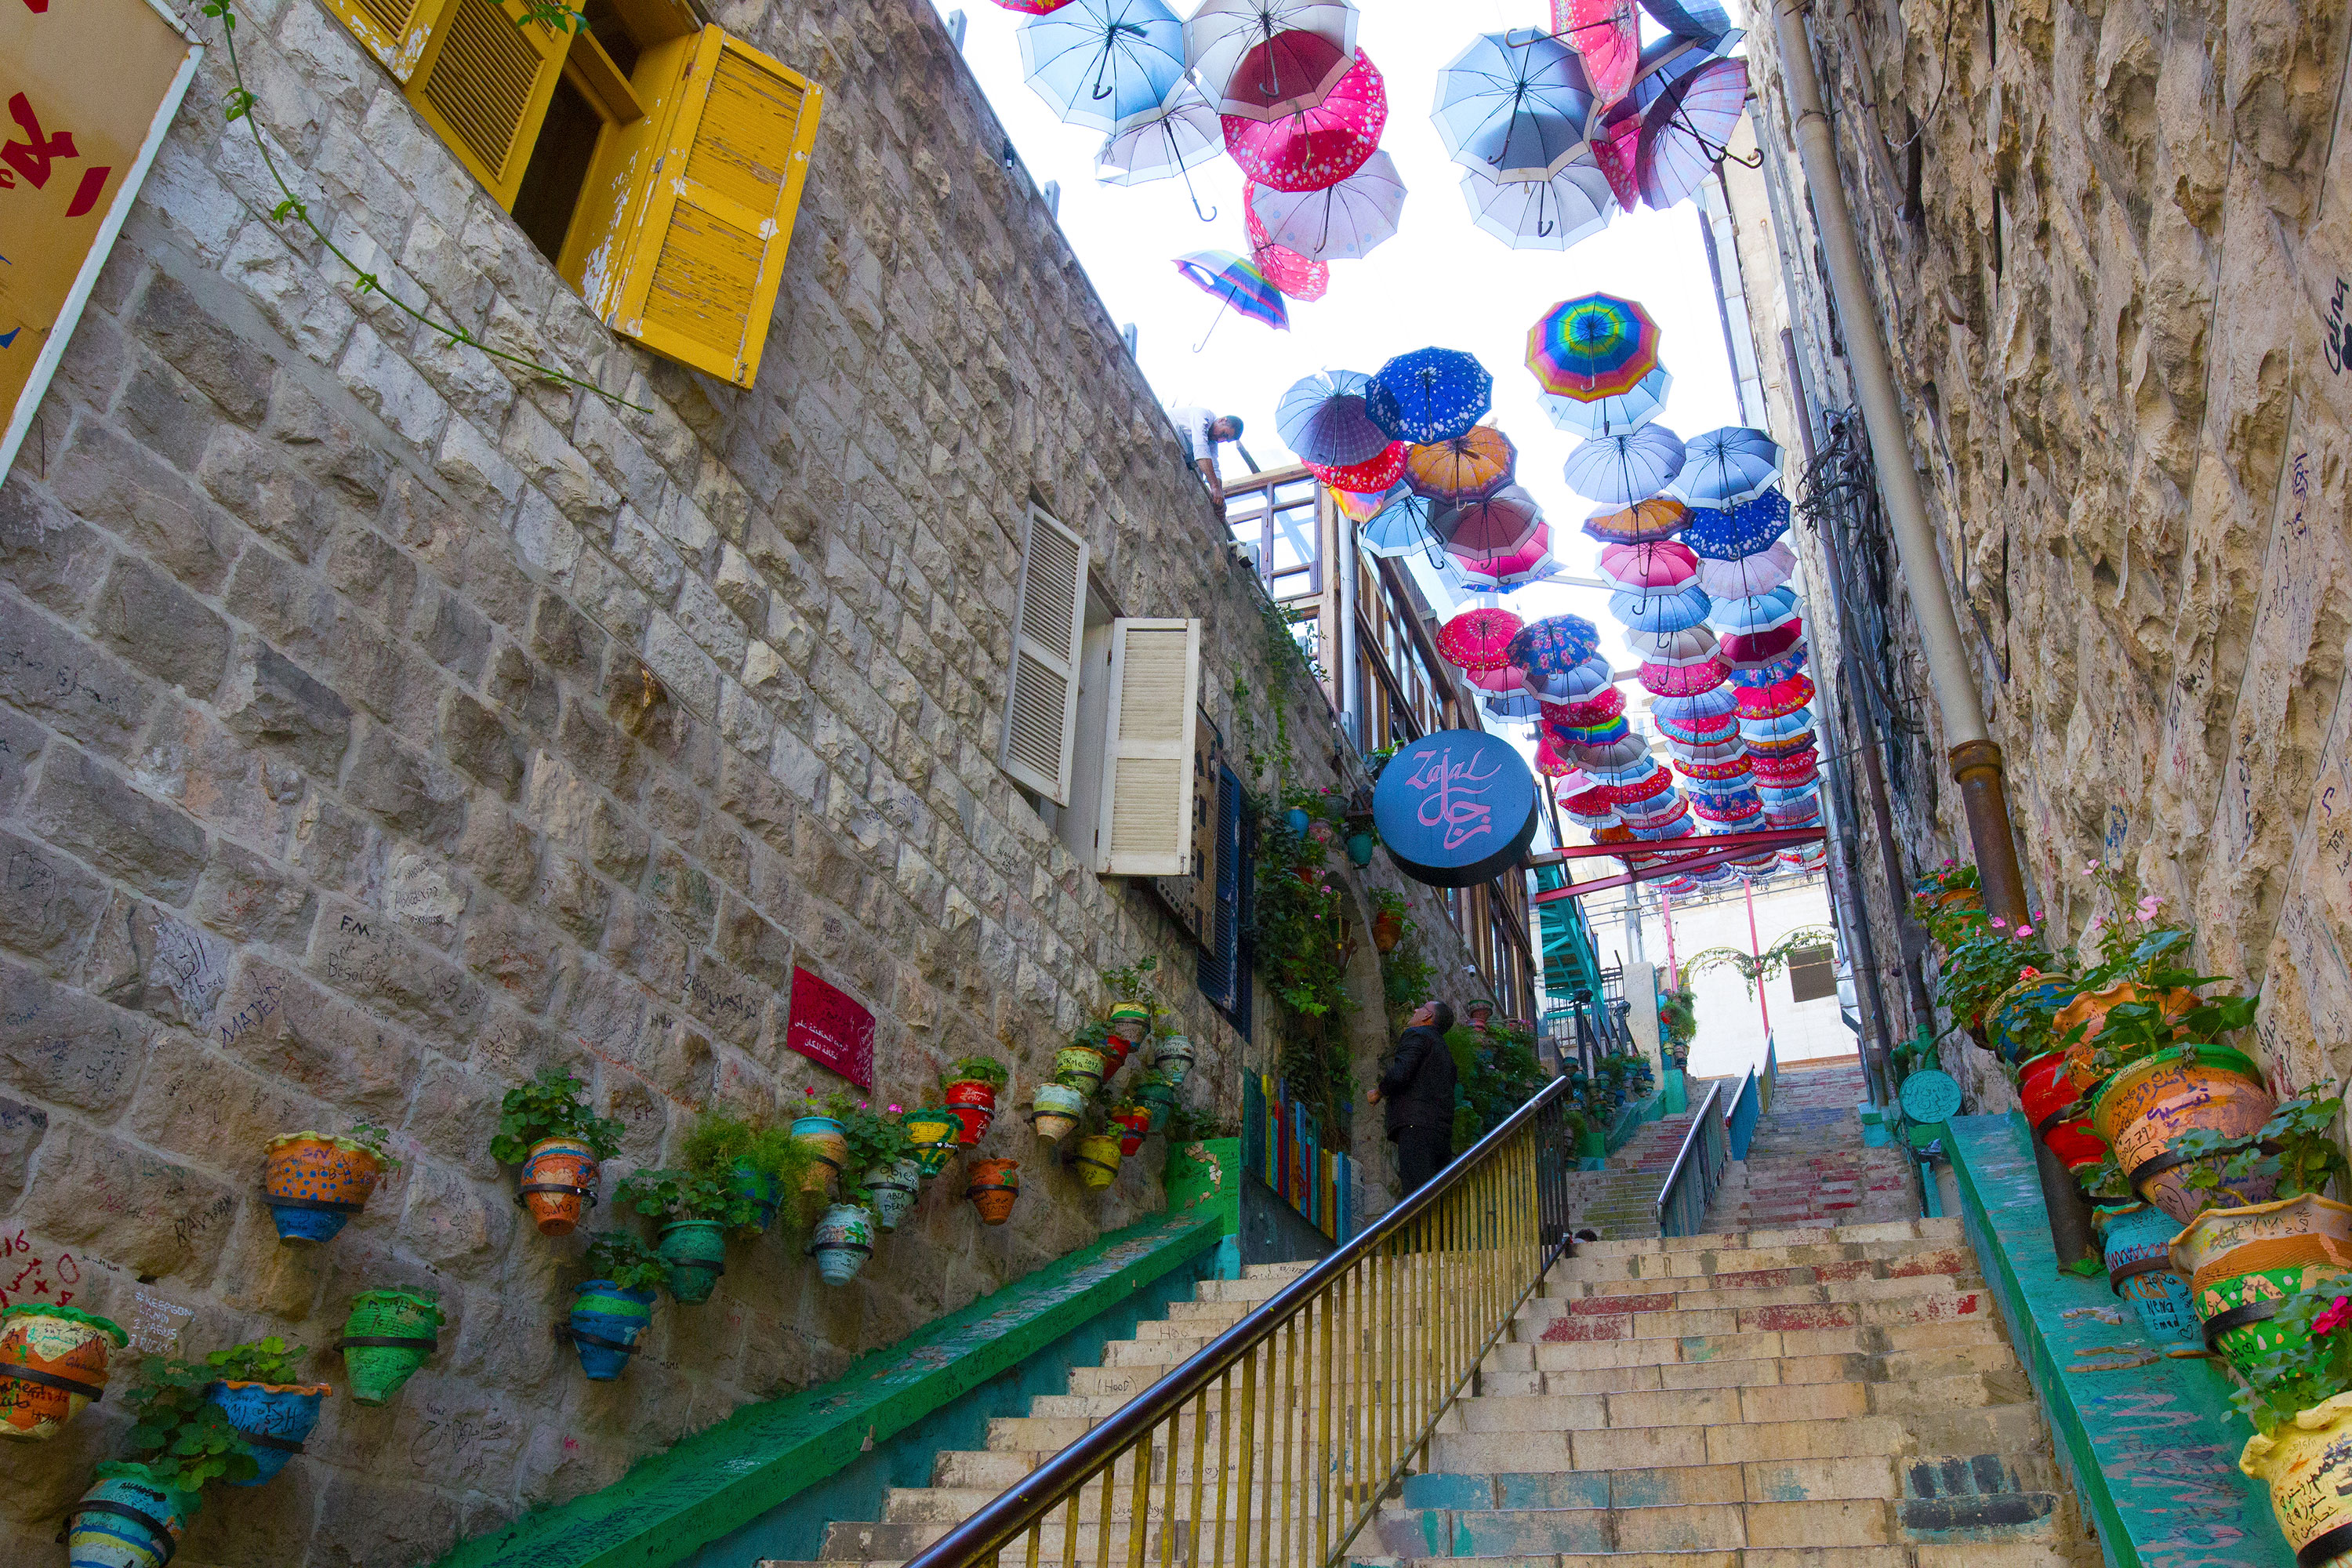 Al Shamasi (the umbrellas) in Amman, Jordan.